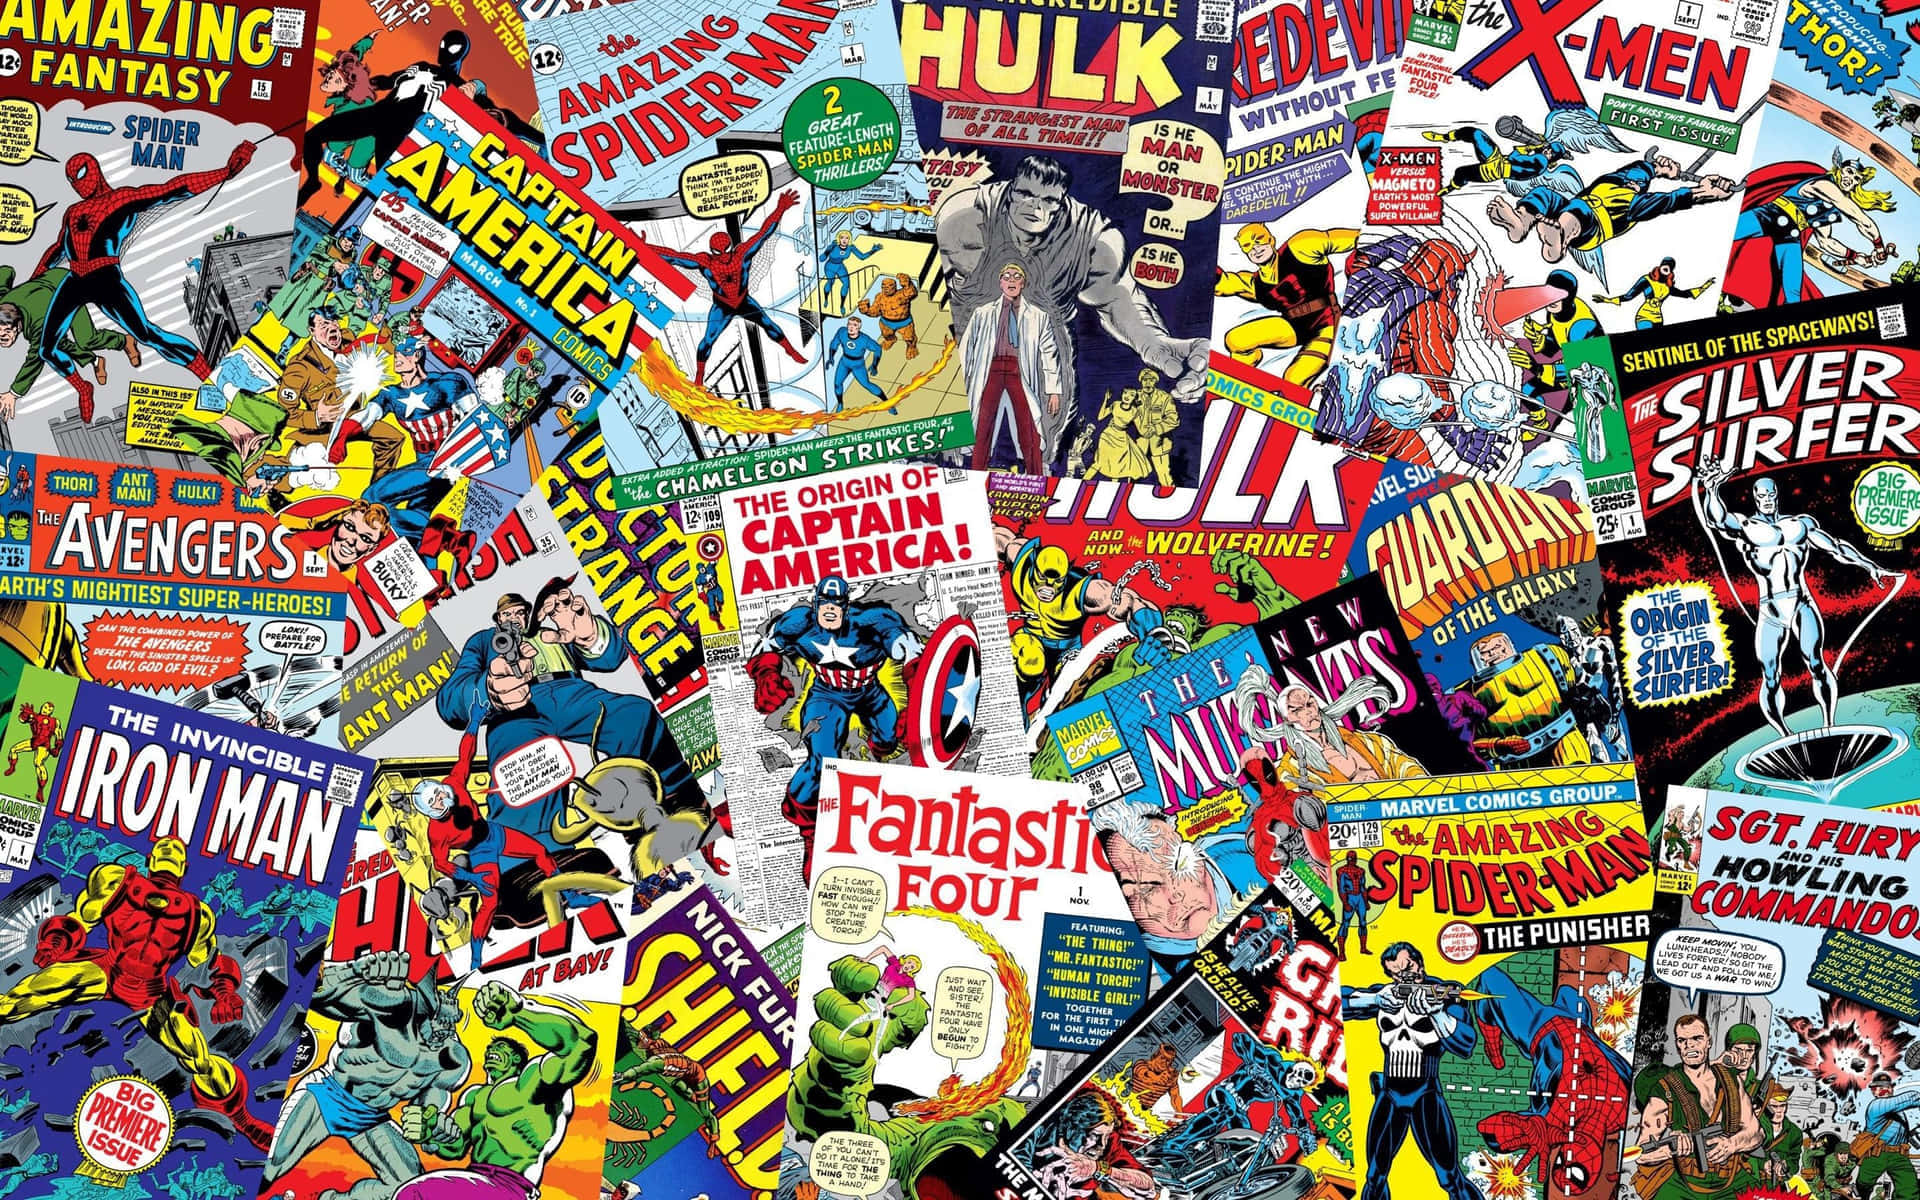 Marvel Wallpaper - New Tab Theme